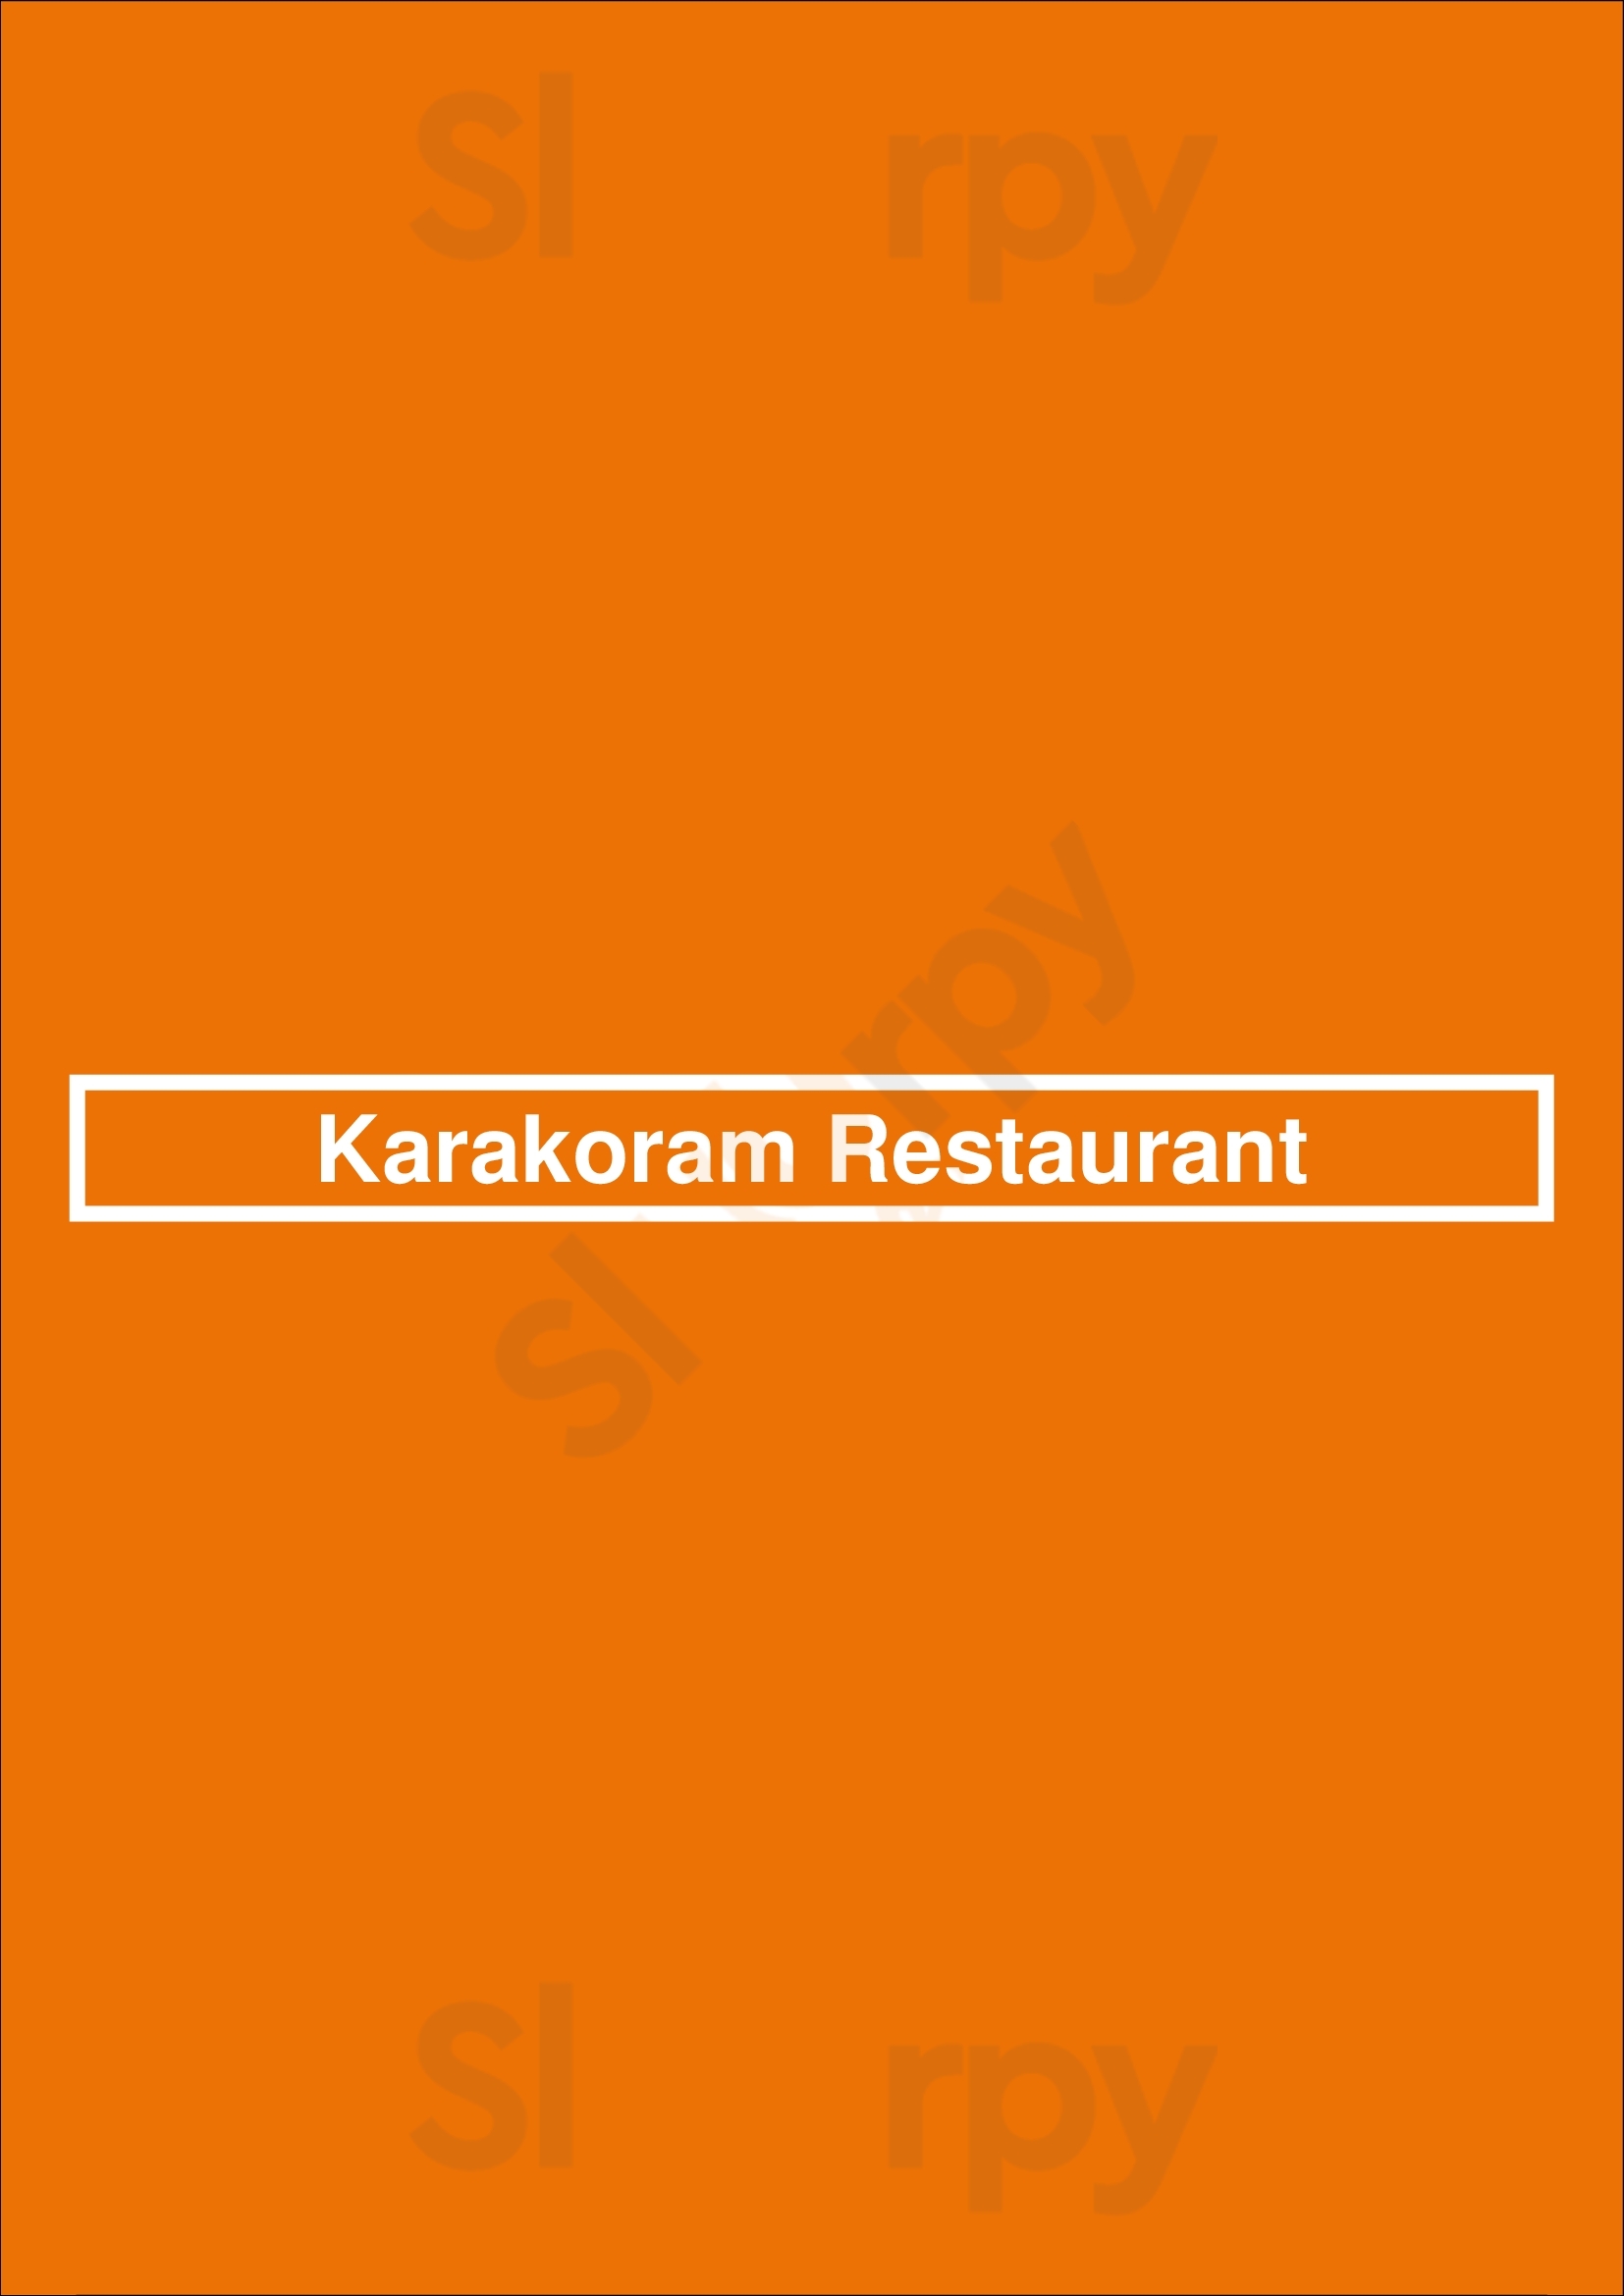 Karakoram Restaurant Vancouver Menu - 1